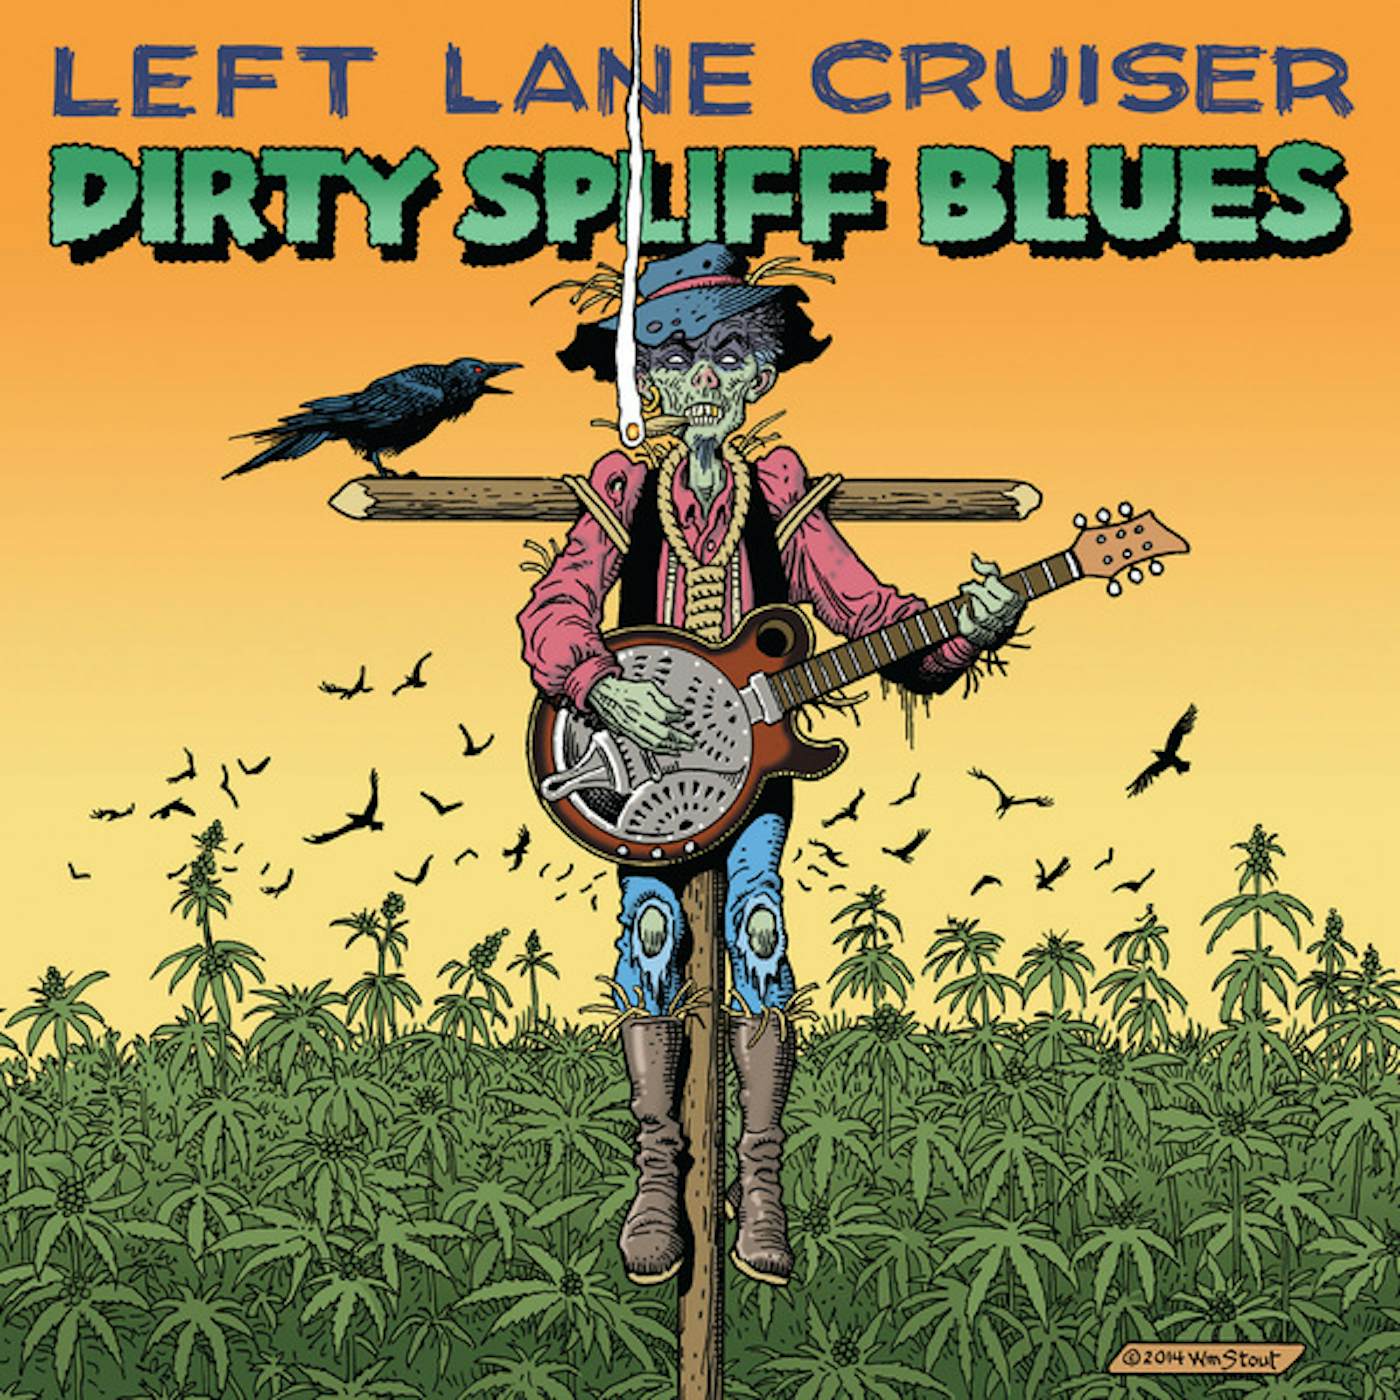 Left Lane Cruiser Dirty Spliff Blues Vinyl Record